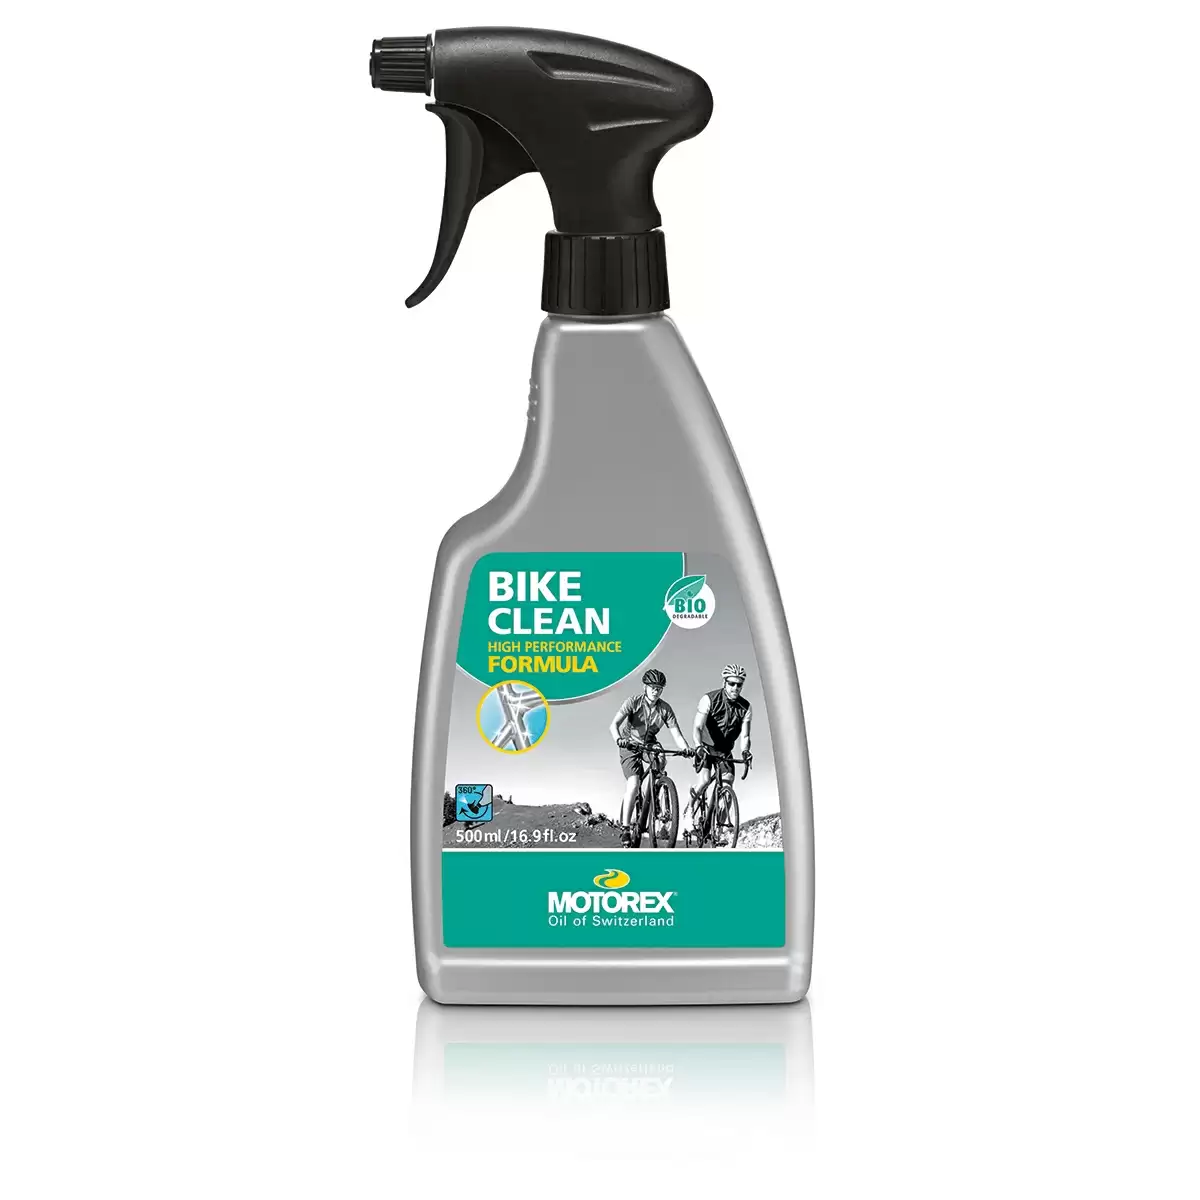 Degreaser Bike Clean Biodegradable Spray 500ml - image